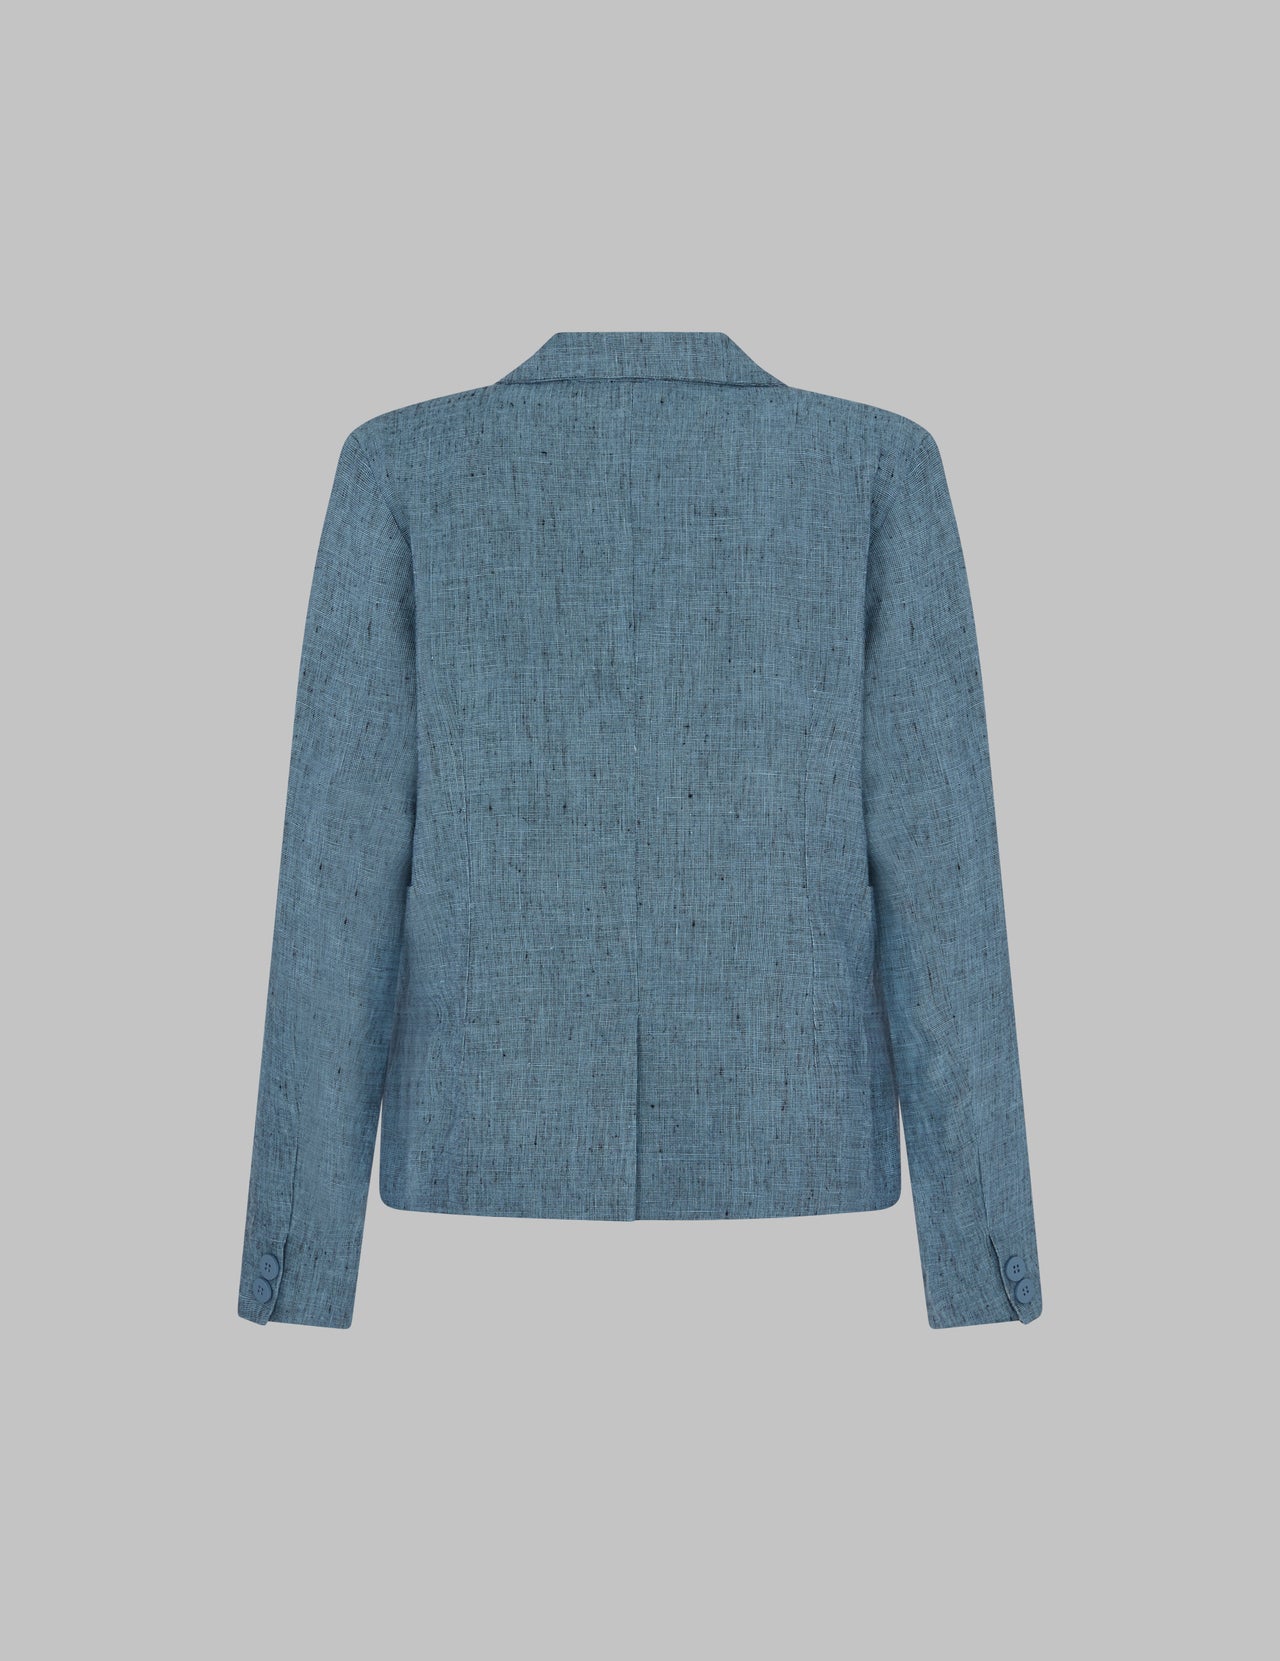  Blue Linen Jacket 